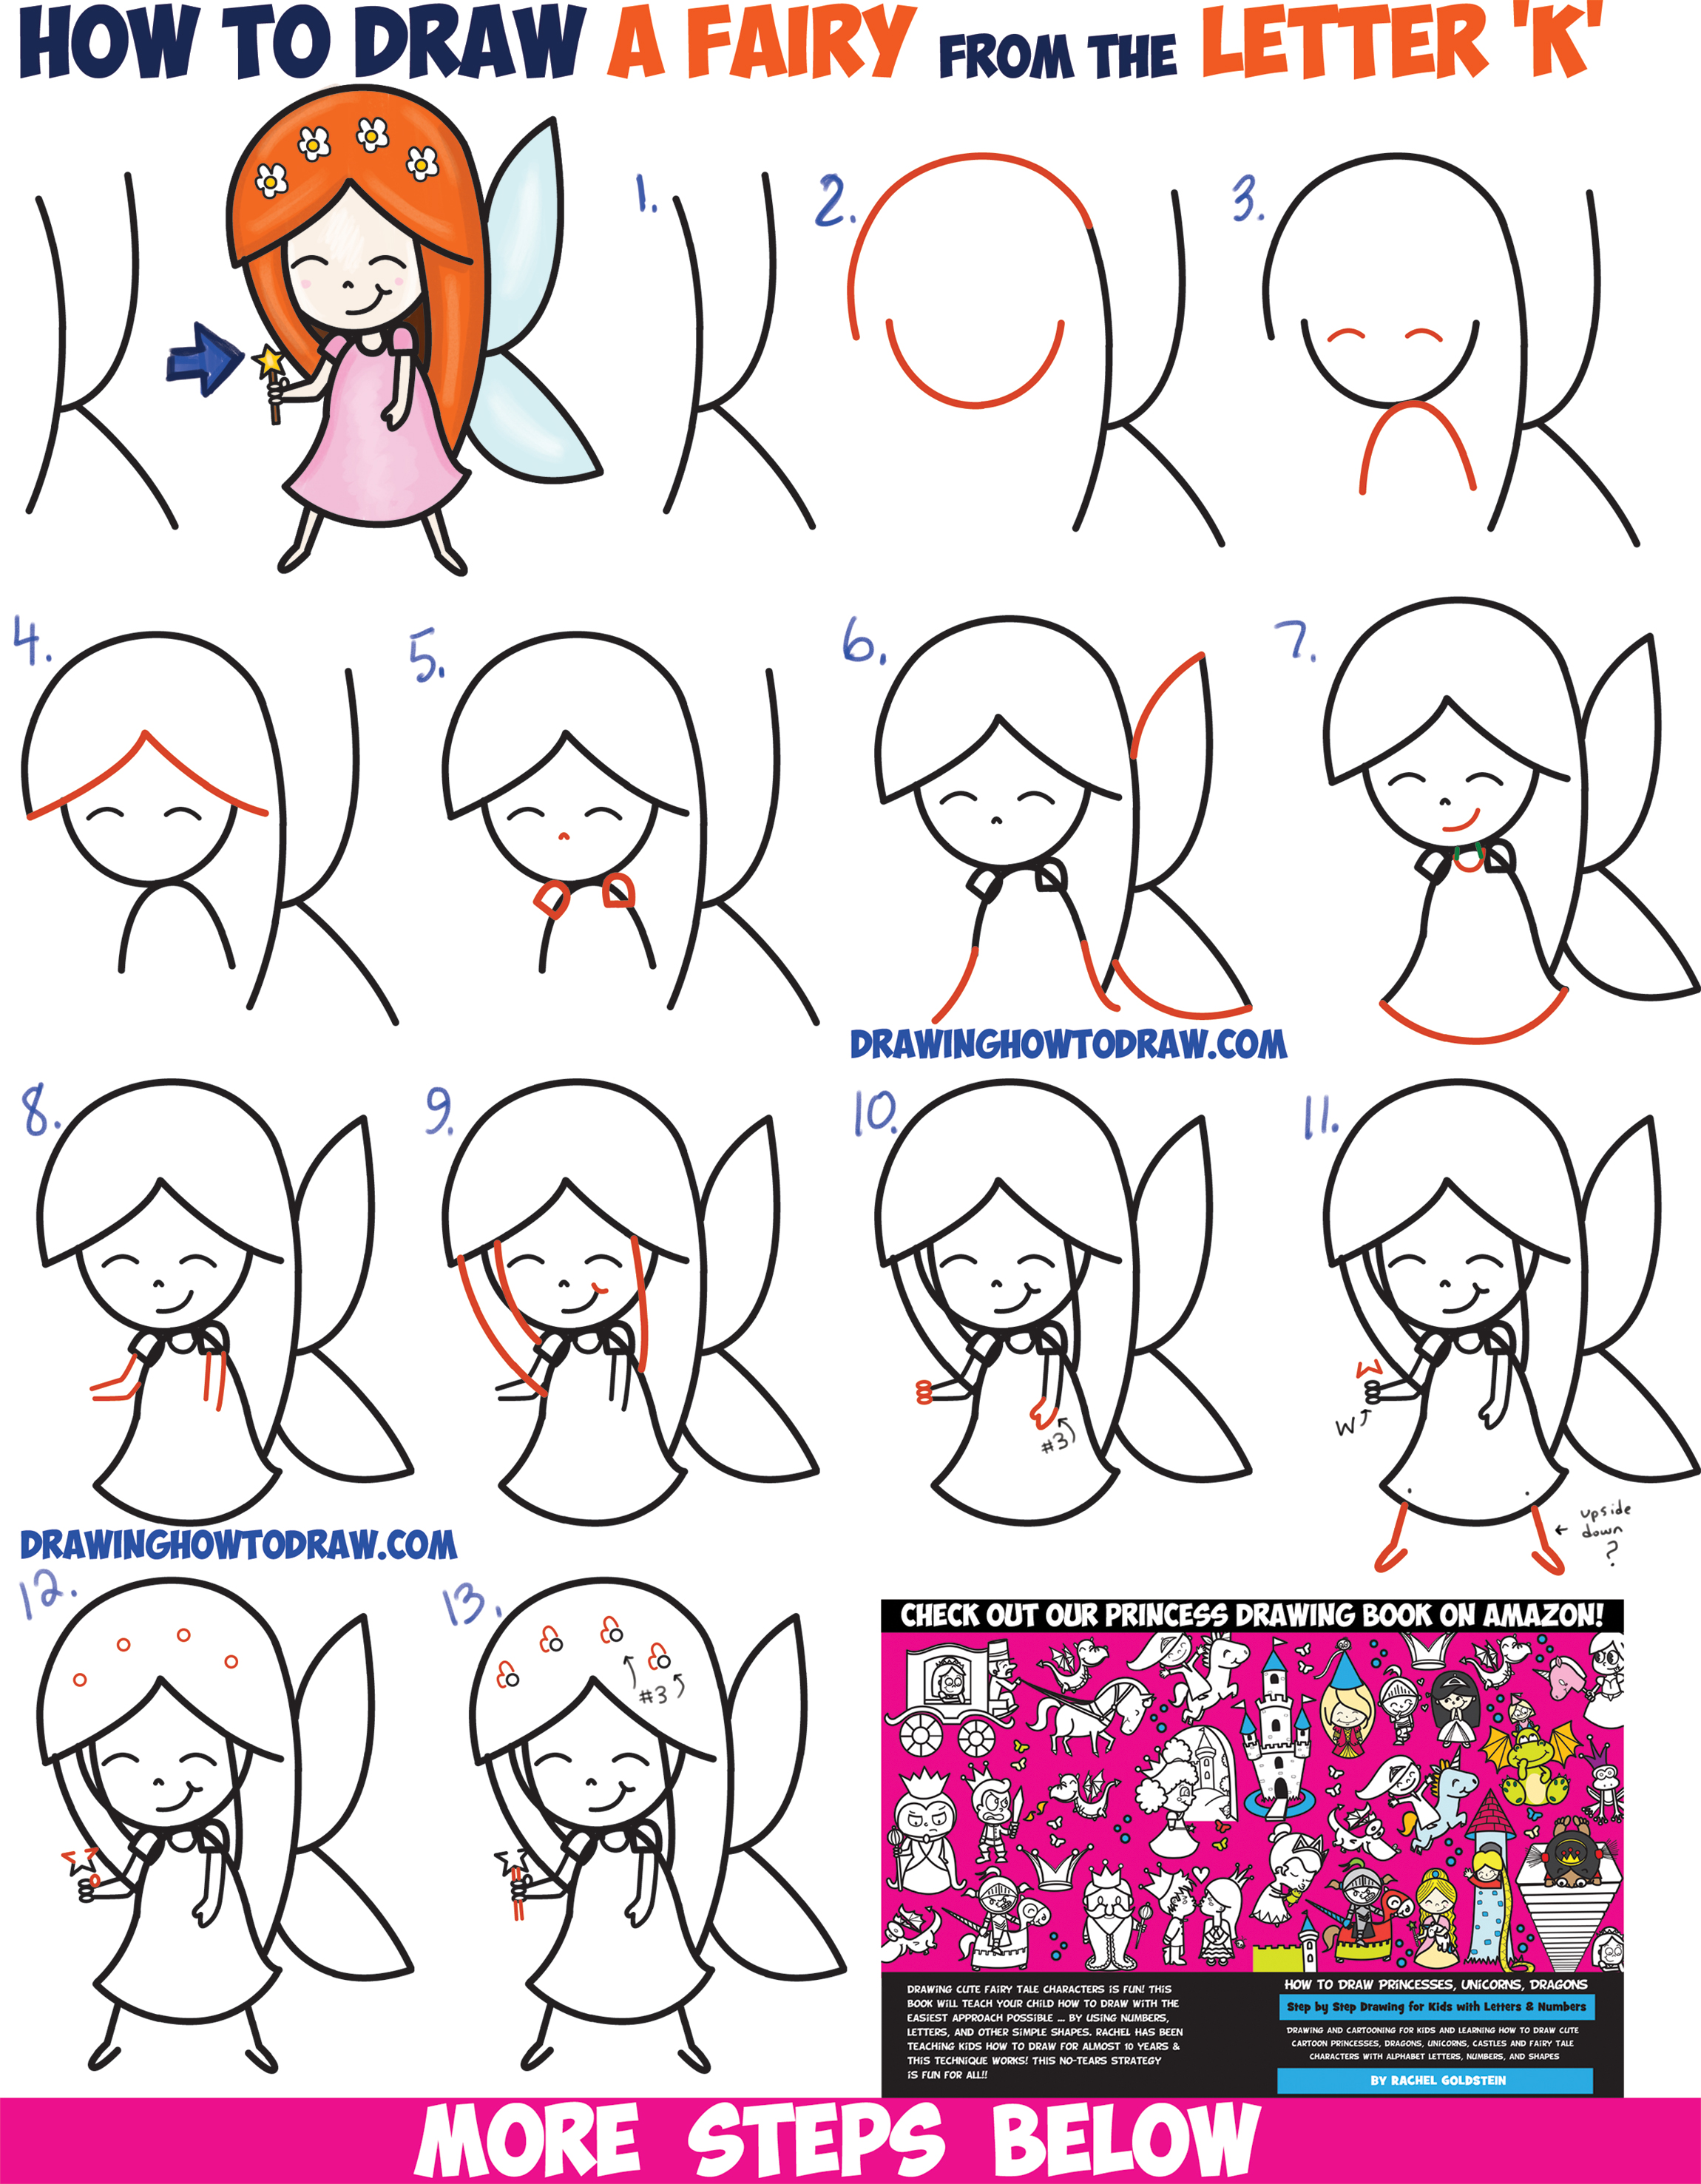 How to Draw a Cute Cartoon Fairy Kawaii Chibi from